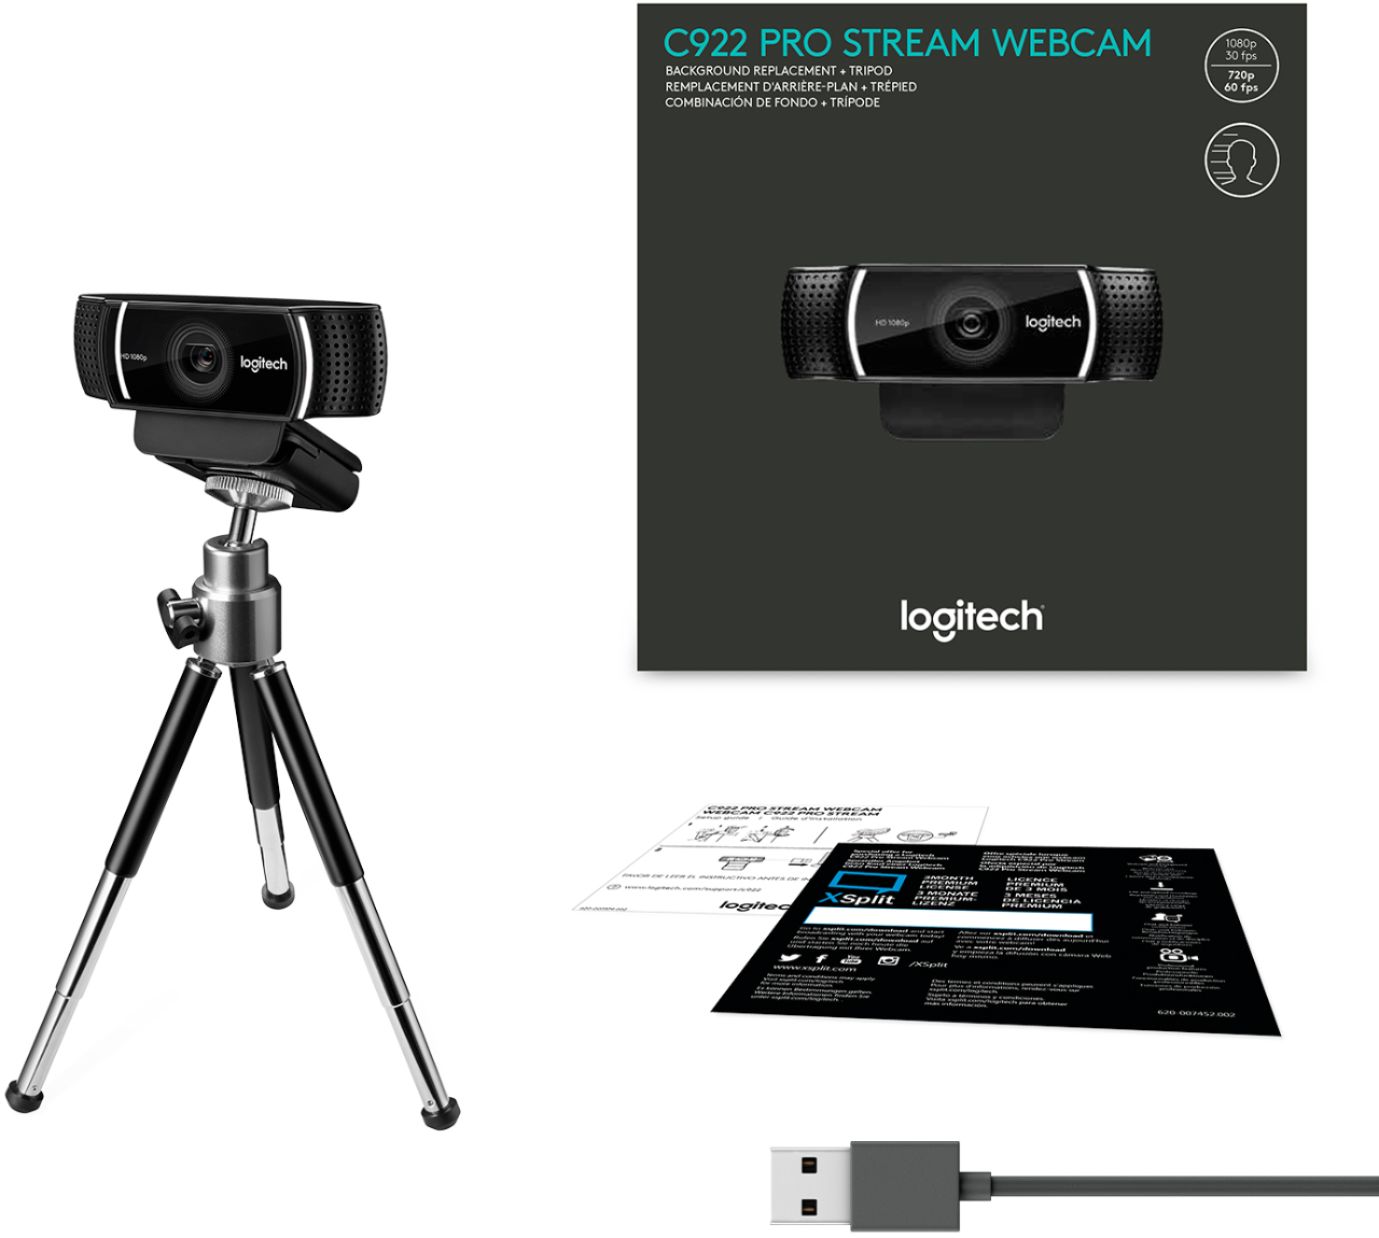 Logitech - C922 Pro Stream 1080p Webcam for HD Video Streaming - Black